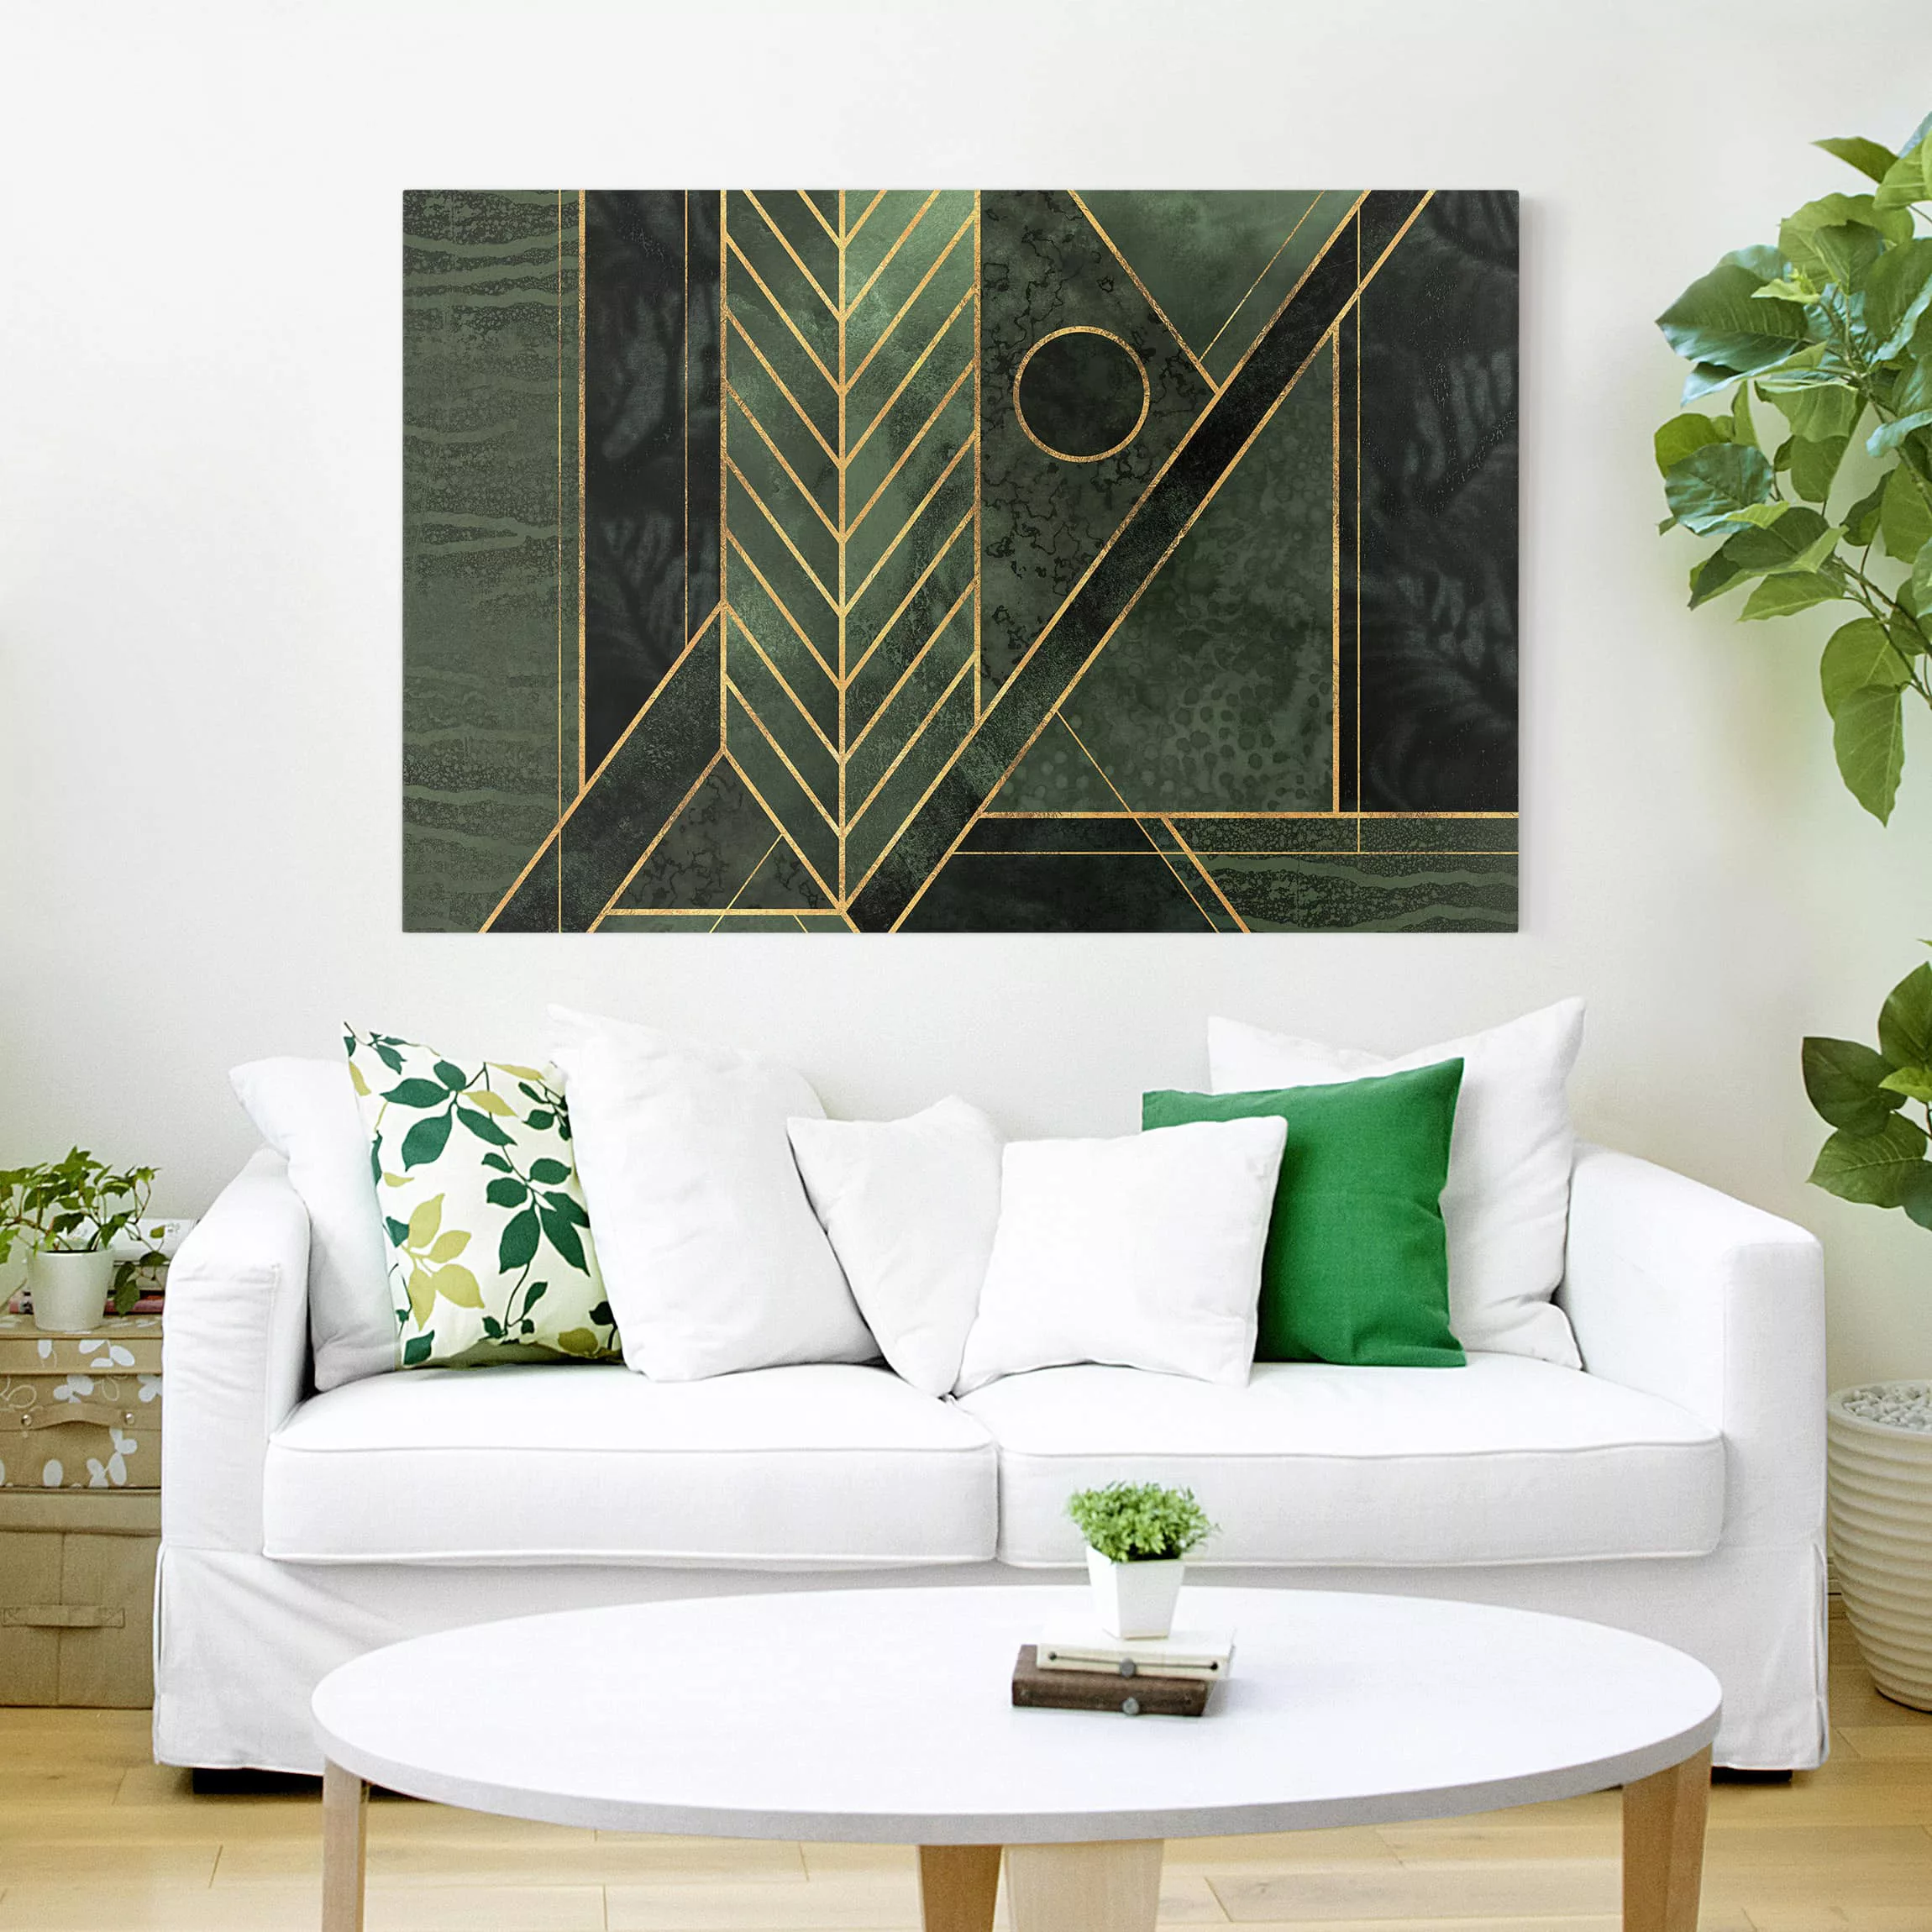 Leinwandbild Abstrakt - Querformat Geometrische Formen Smaragd Gold günstig online kaufen